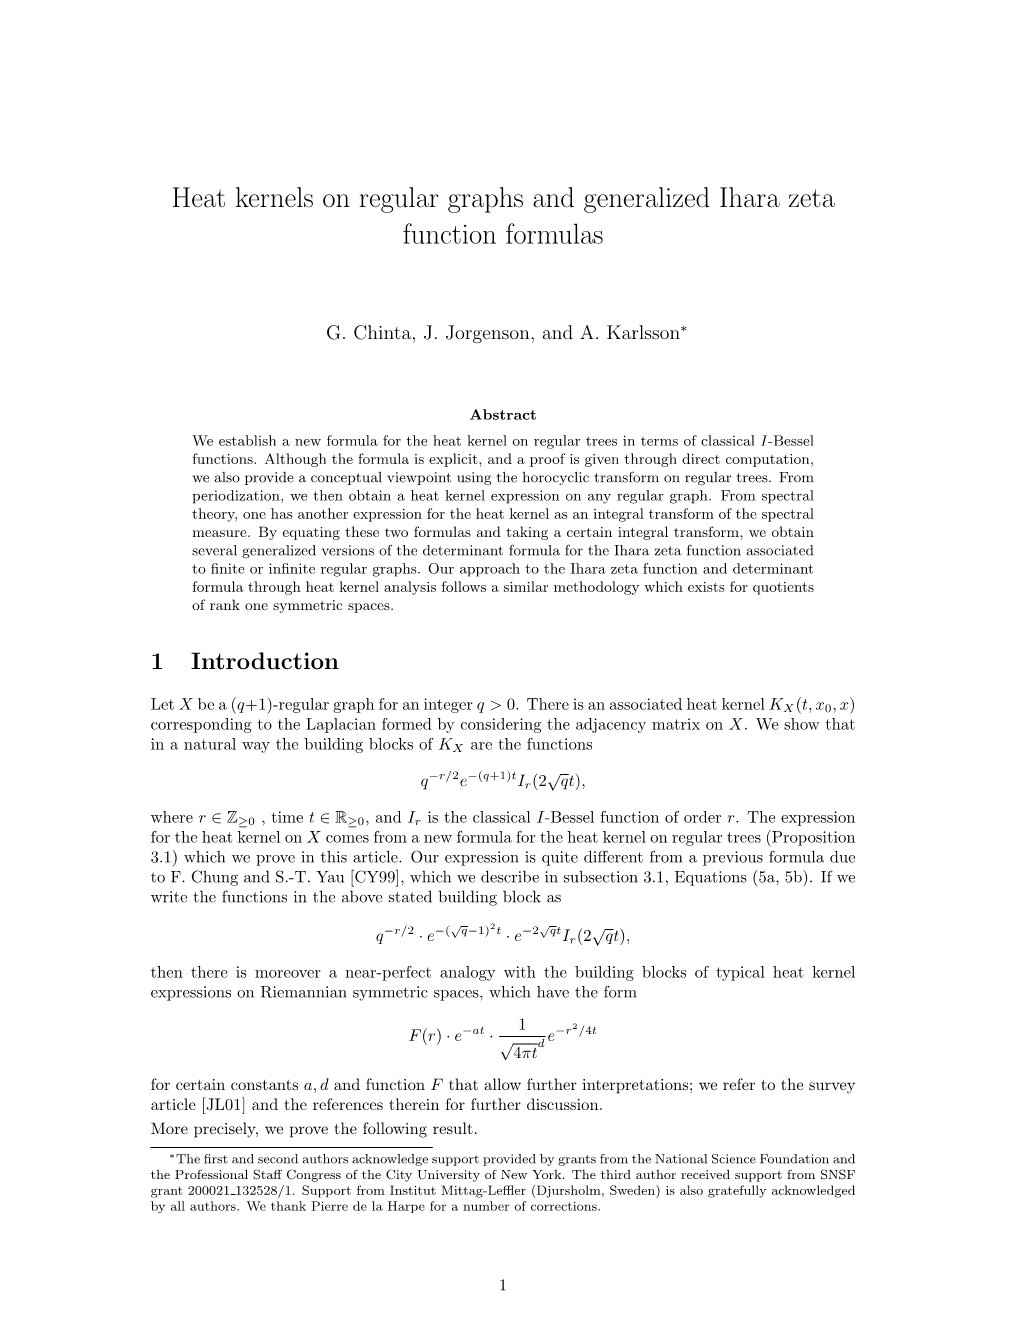 Heat Kernels on Regular Graphs and Generalized Ihara Zeta Function Formulas